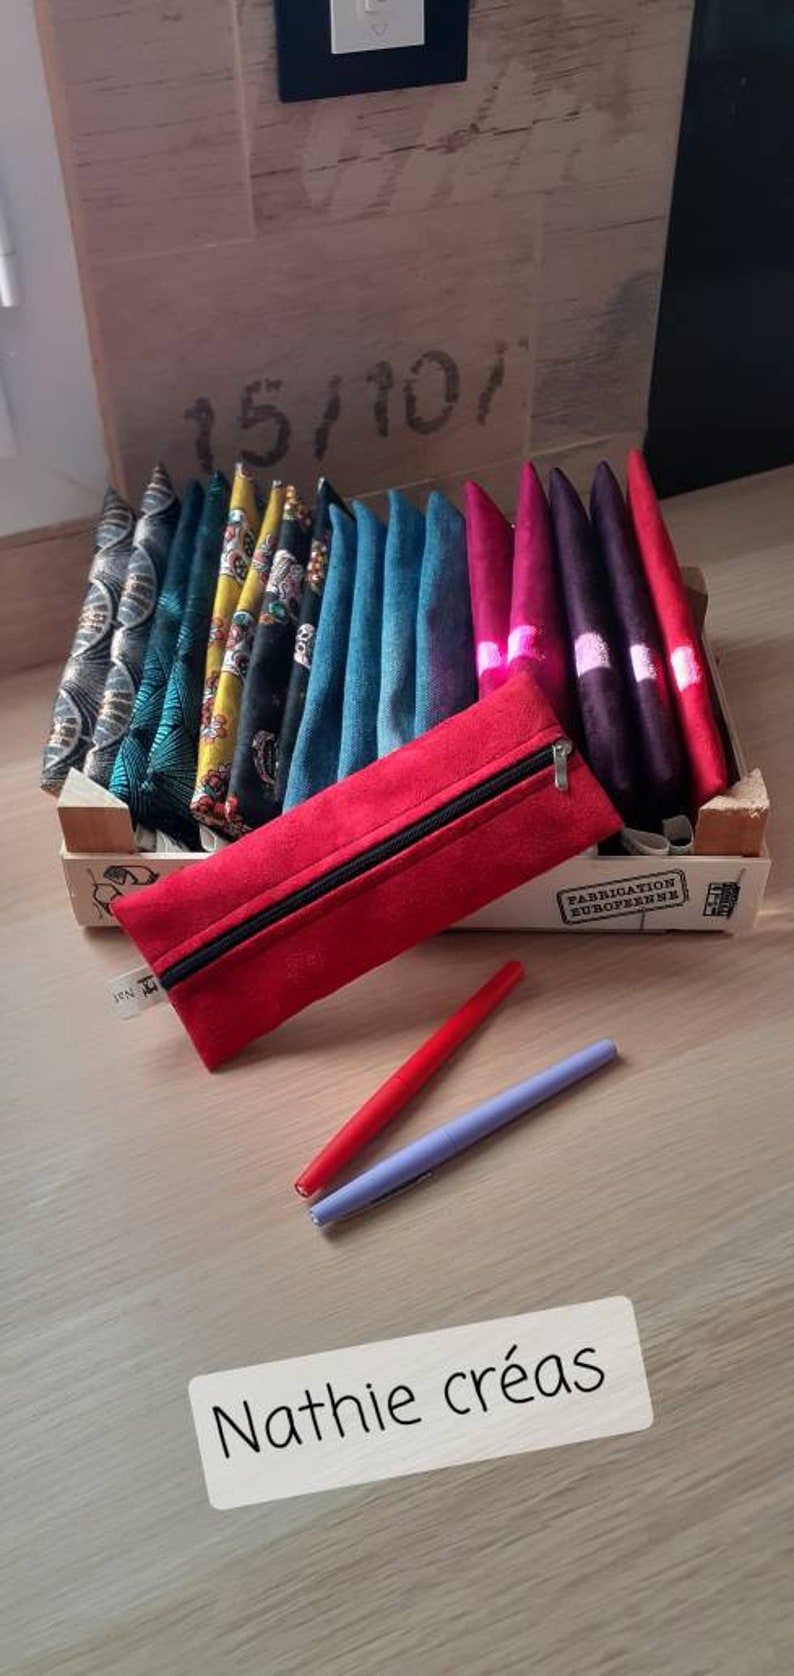 Flat pencil case, pen bag, makeup bag, faculty kit, tote bag image 1